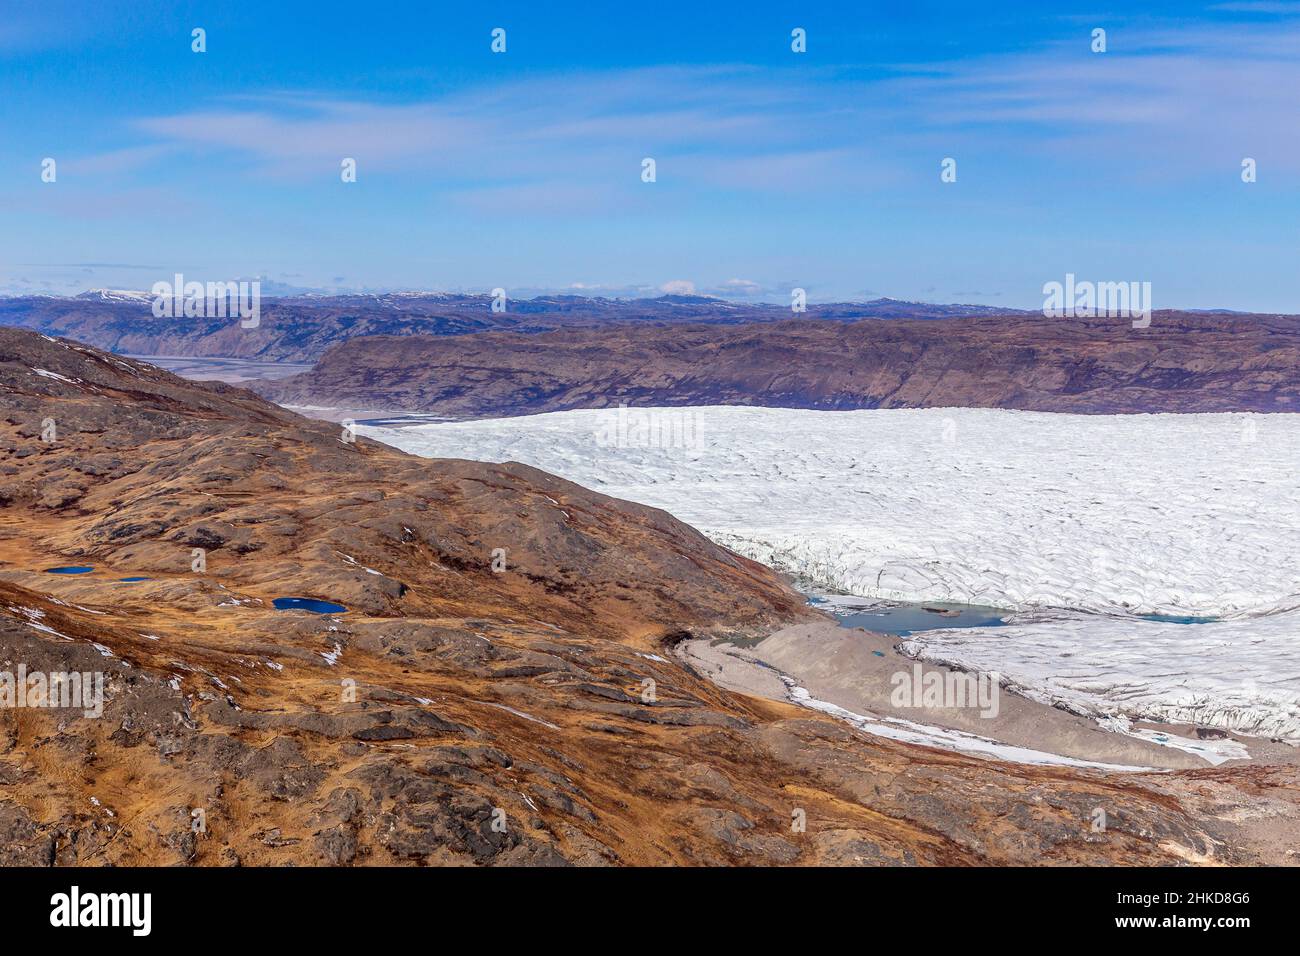 Greenlandic tundra landscape with  ice cap melting, aerial view, near Kangerlussuaq, Greenland Stock Photo